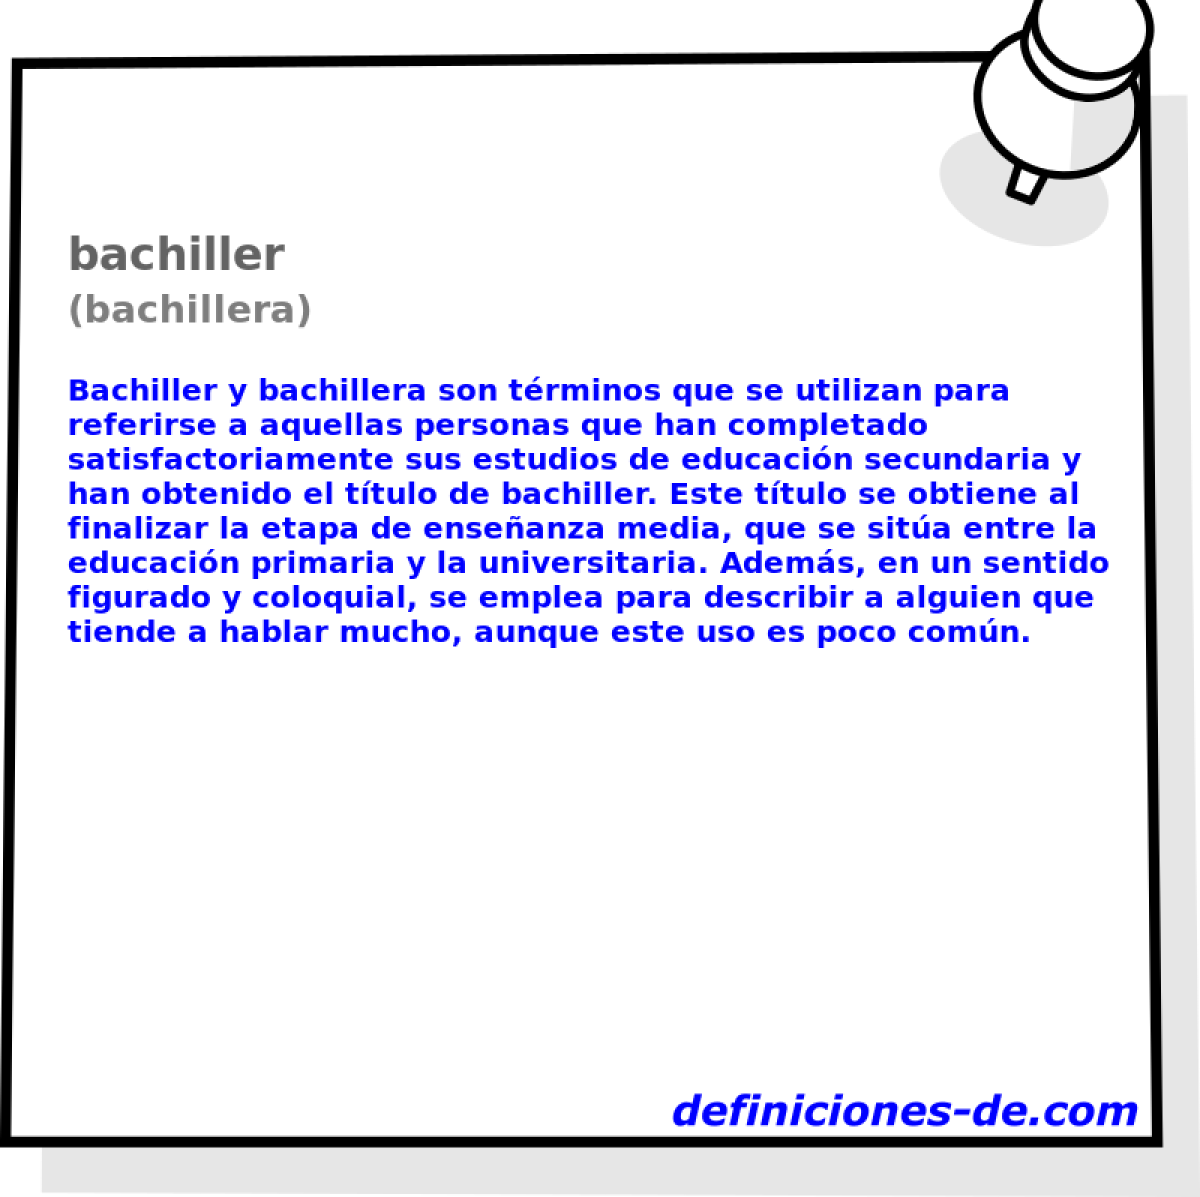 bachiller (bachillera)